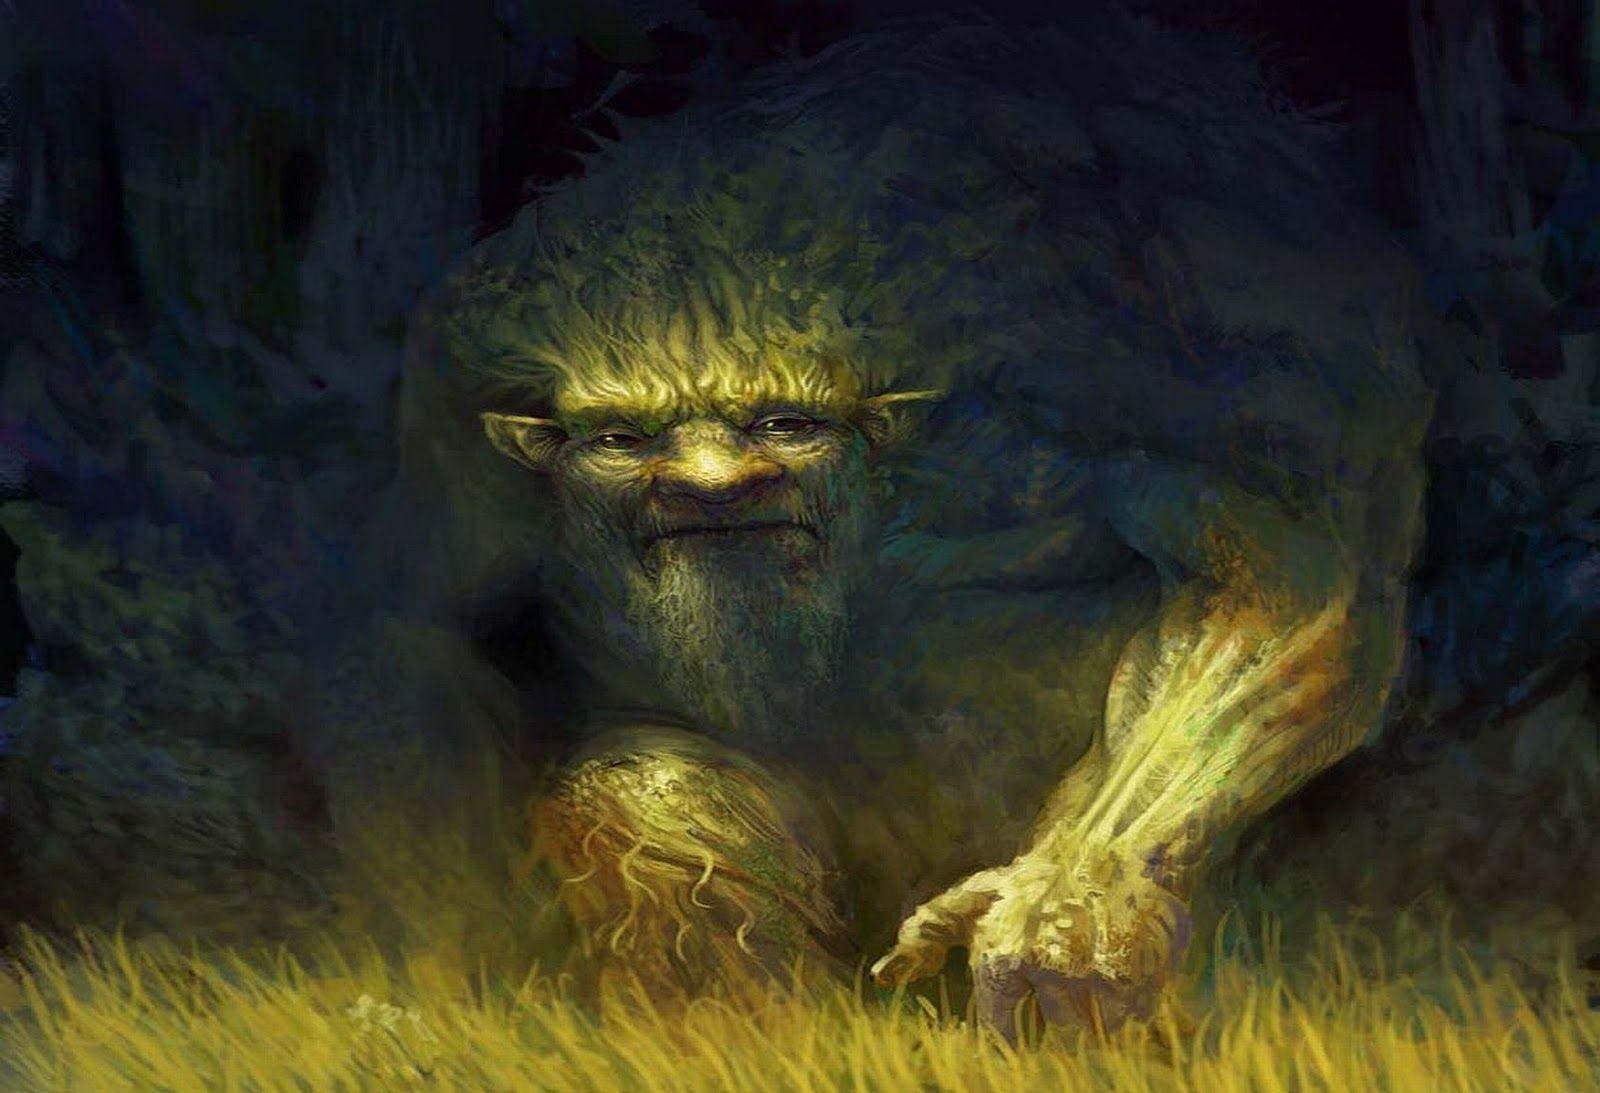 Forest Spirit Fantasy Creature Wallpaper, image, background, photos